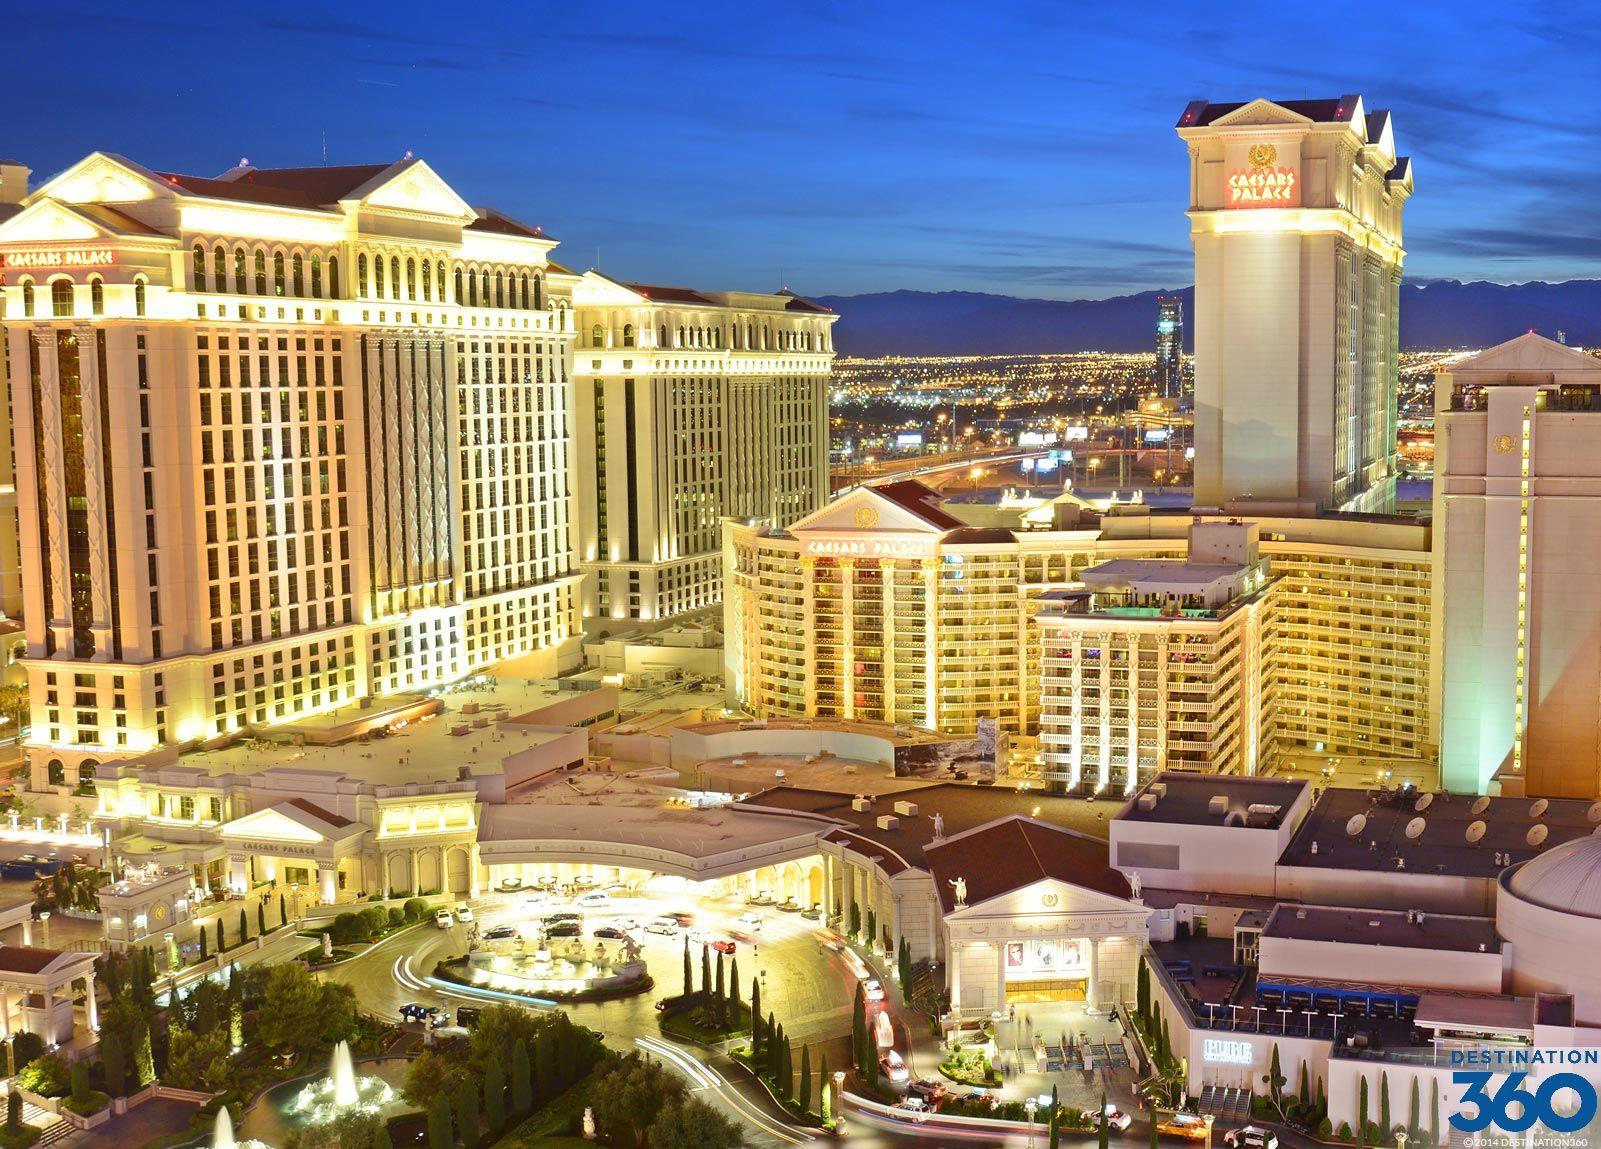 Vegas Caesars Palace Logo - Caesars Palace Las Vegas - See virtual tours of Caesars Palace Hotel